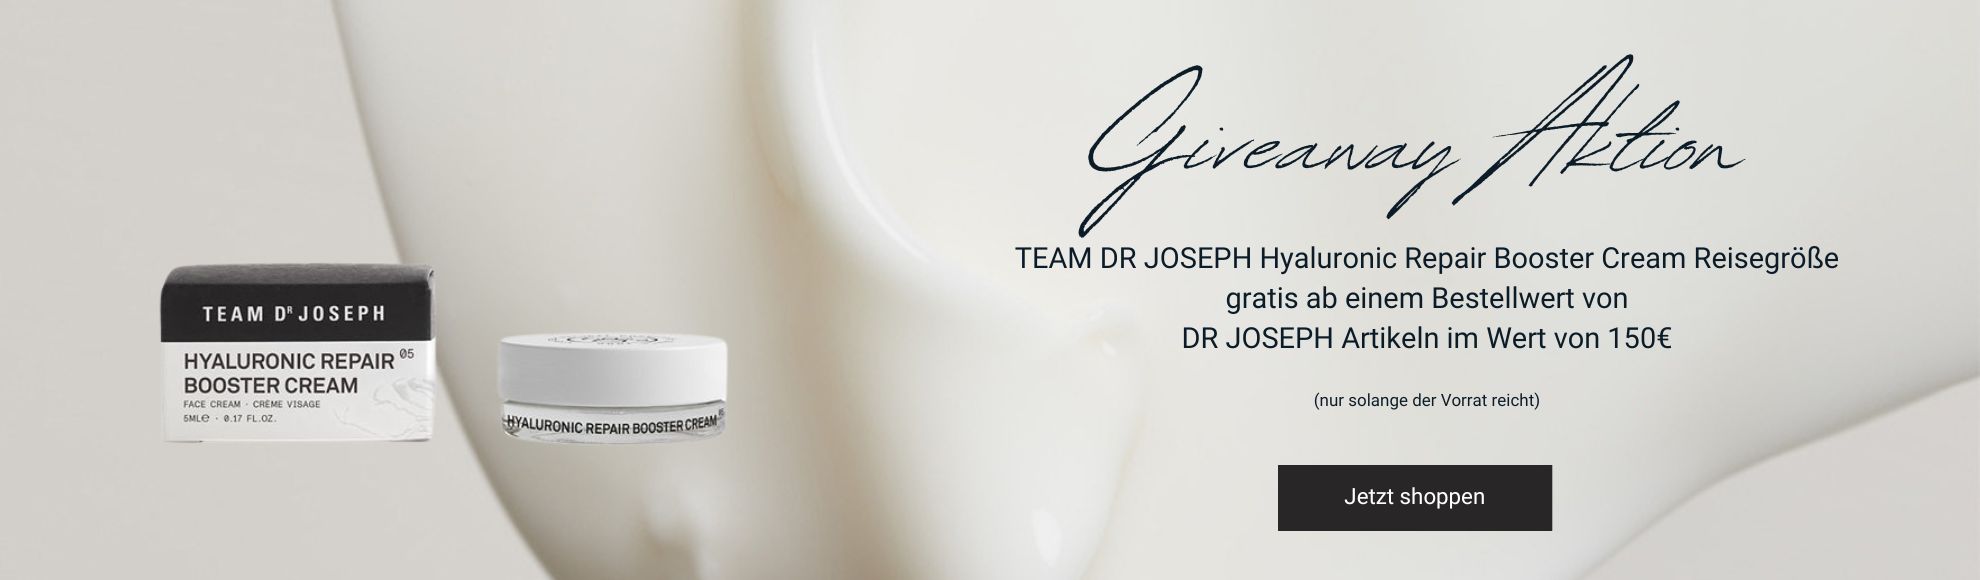 TEAM DR JOSEPH Hyaluronic Repair Booster Cream Reisegröße gratis